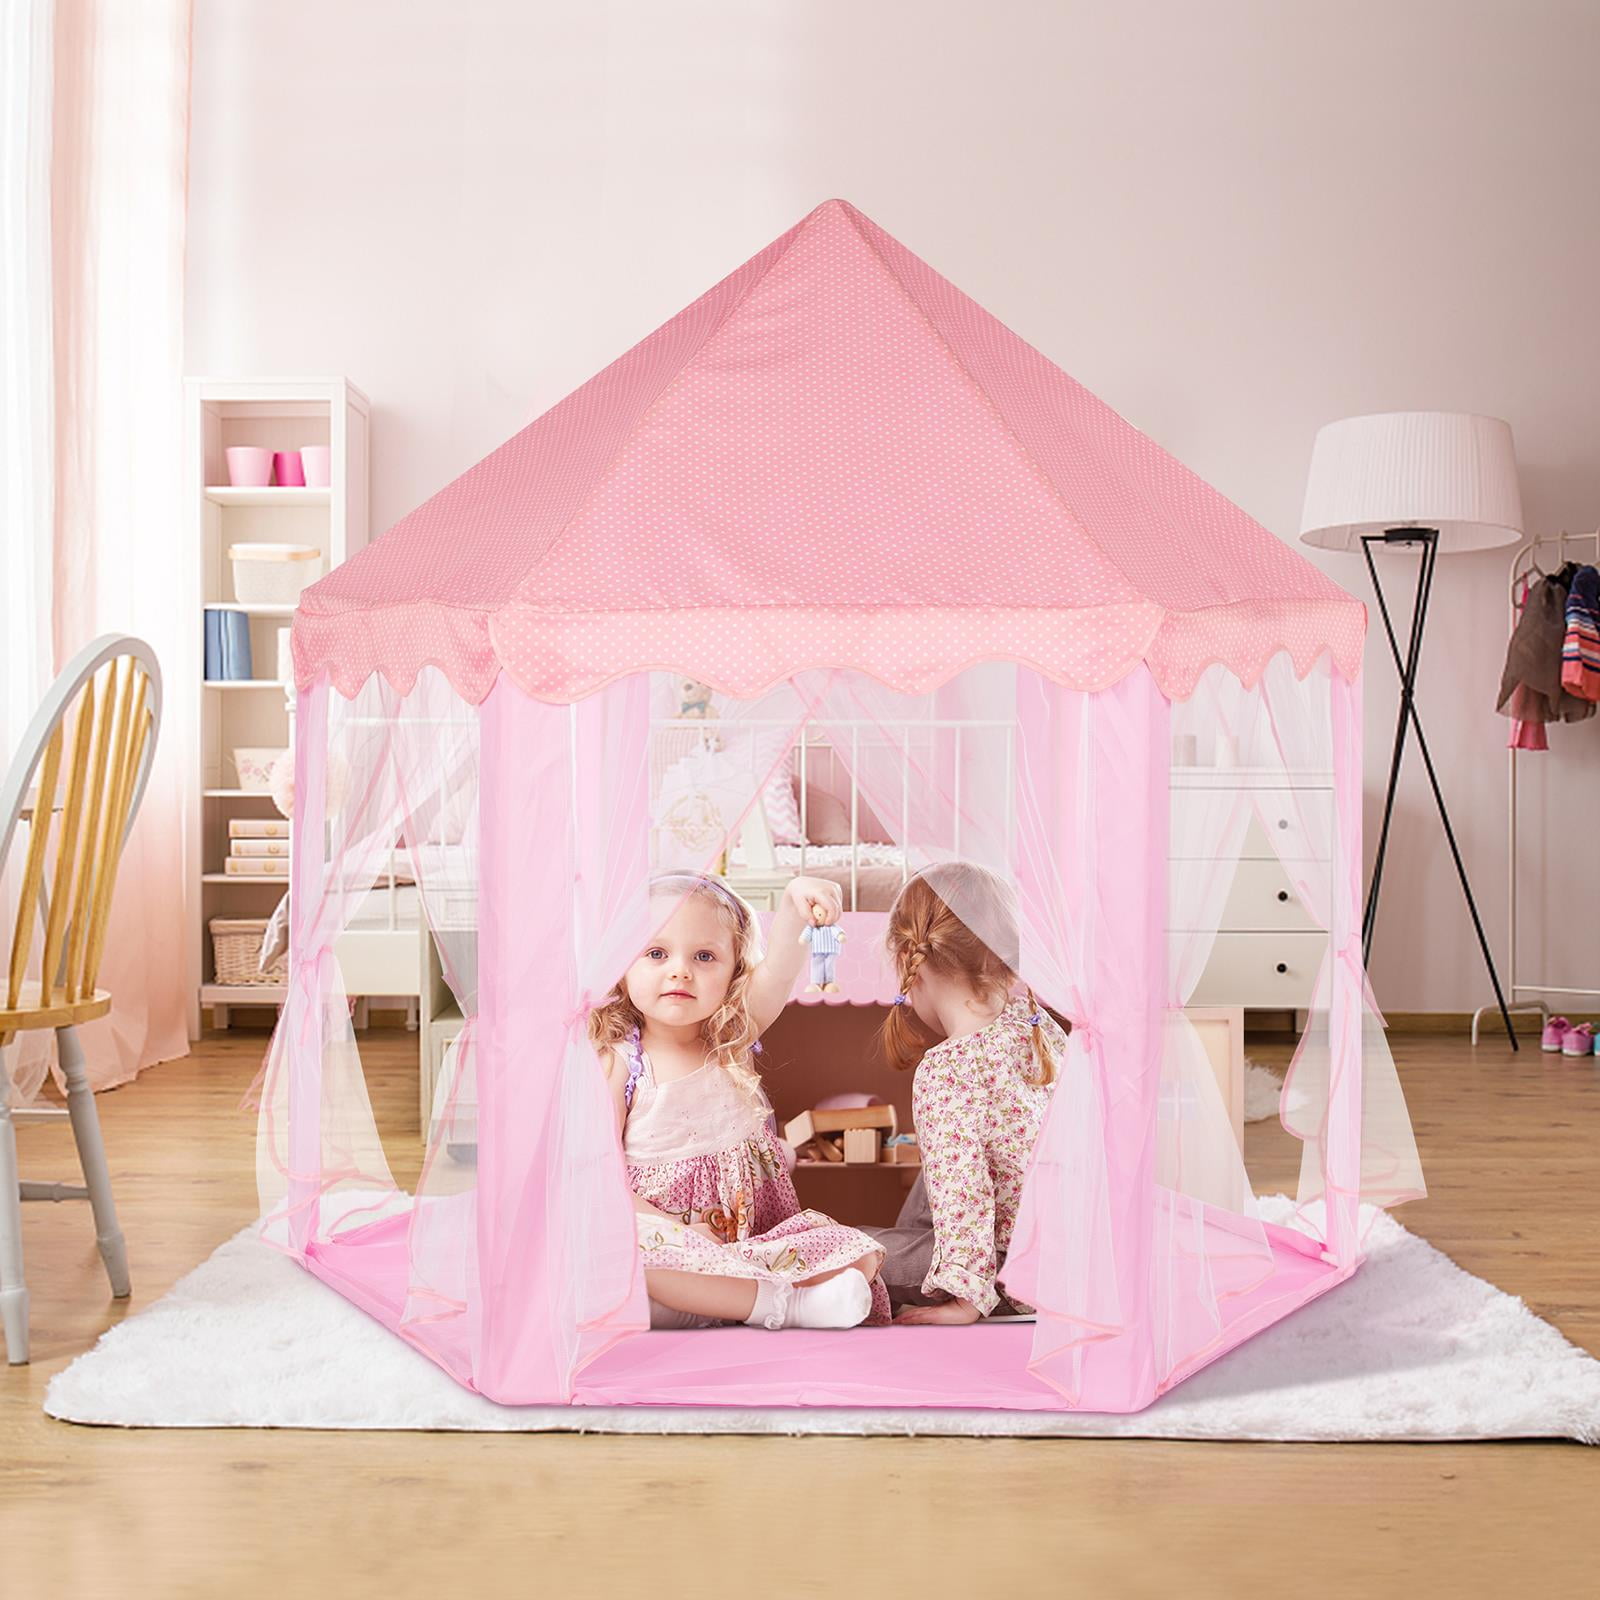 Girls Pink Princess Play Tent Portable Indoor Outdoor Kids Pop Up Play Tent 